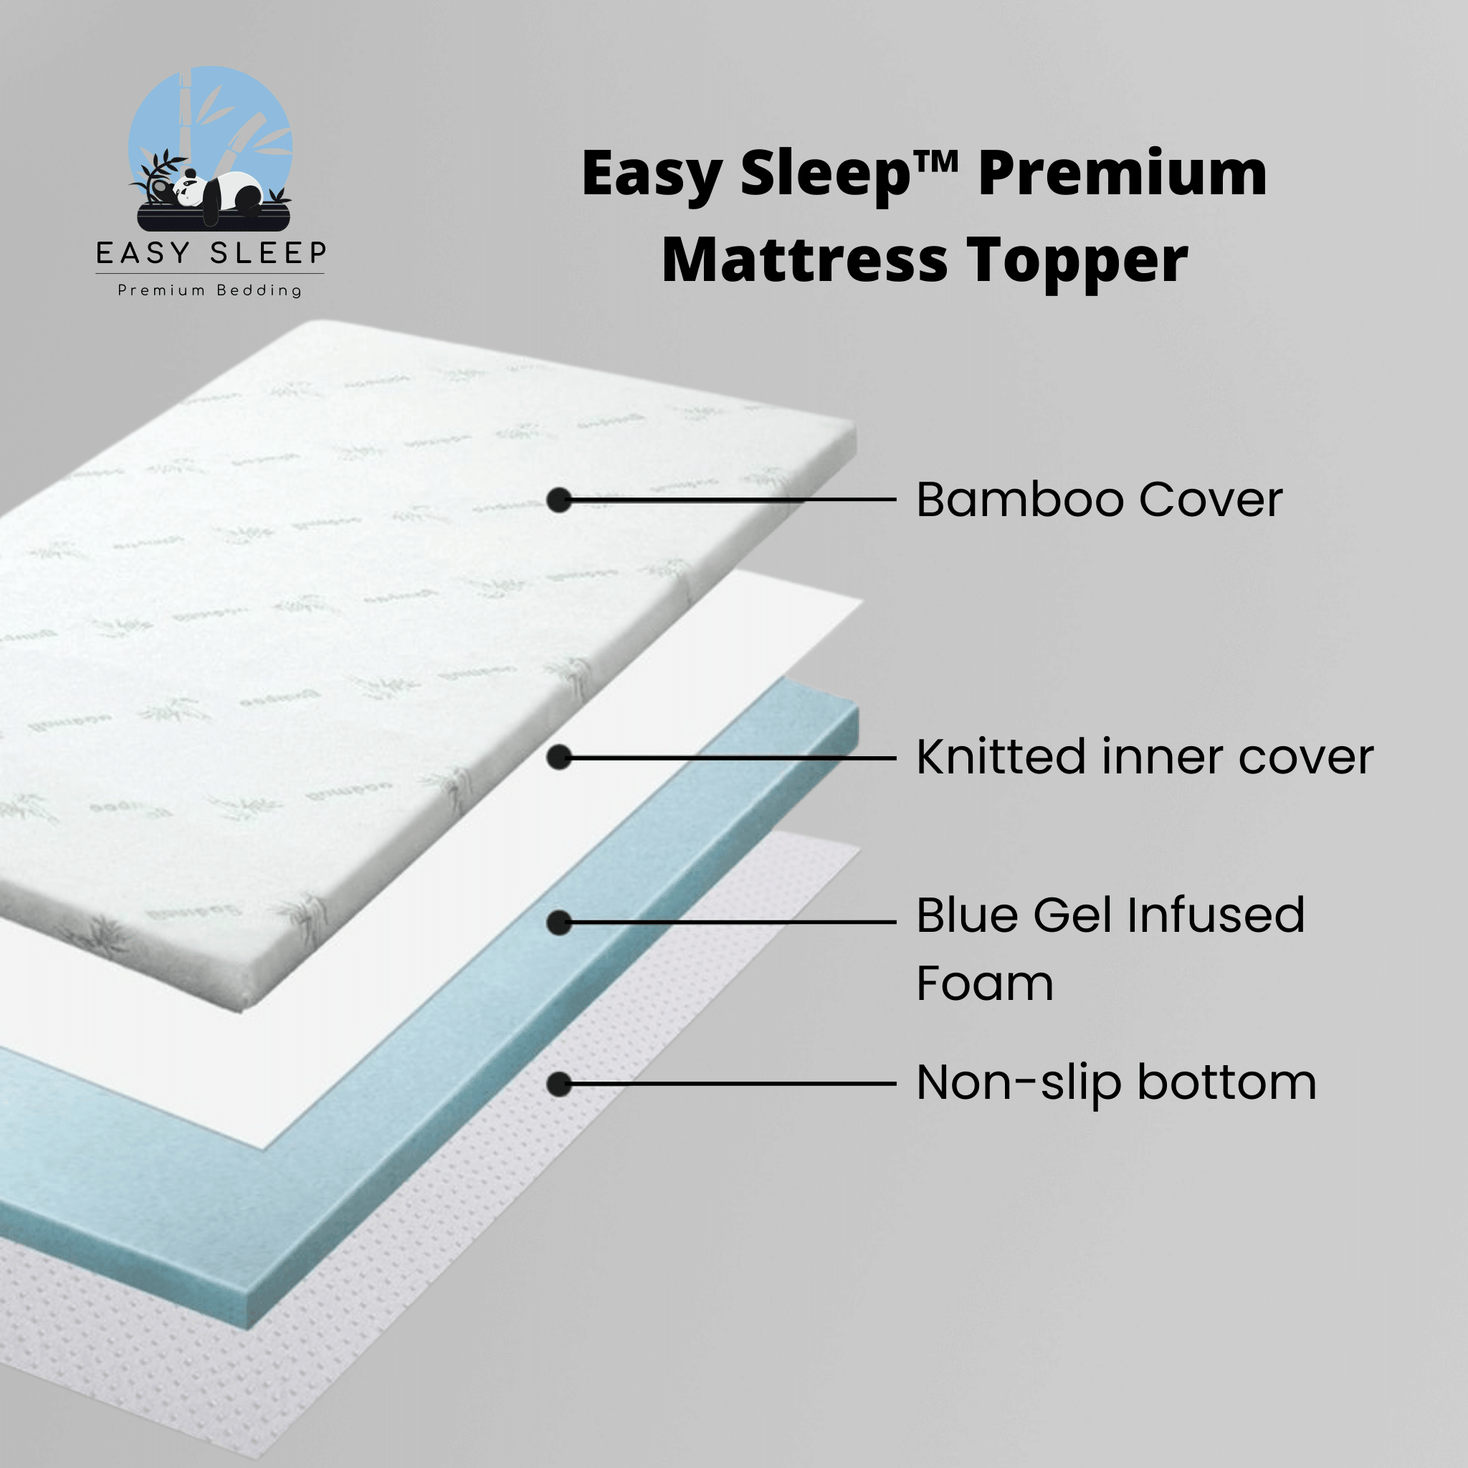 Easy Sleep™ Premium Mattress Topper